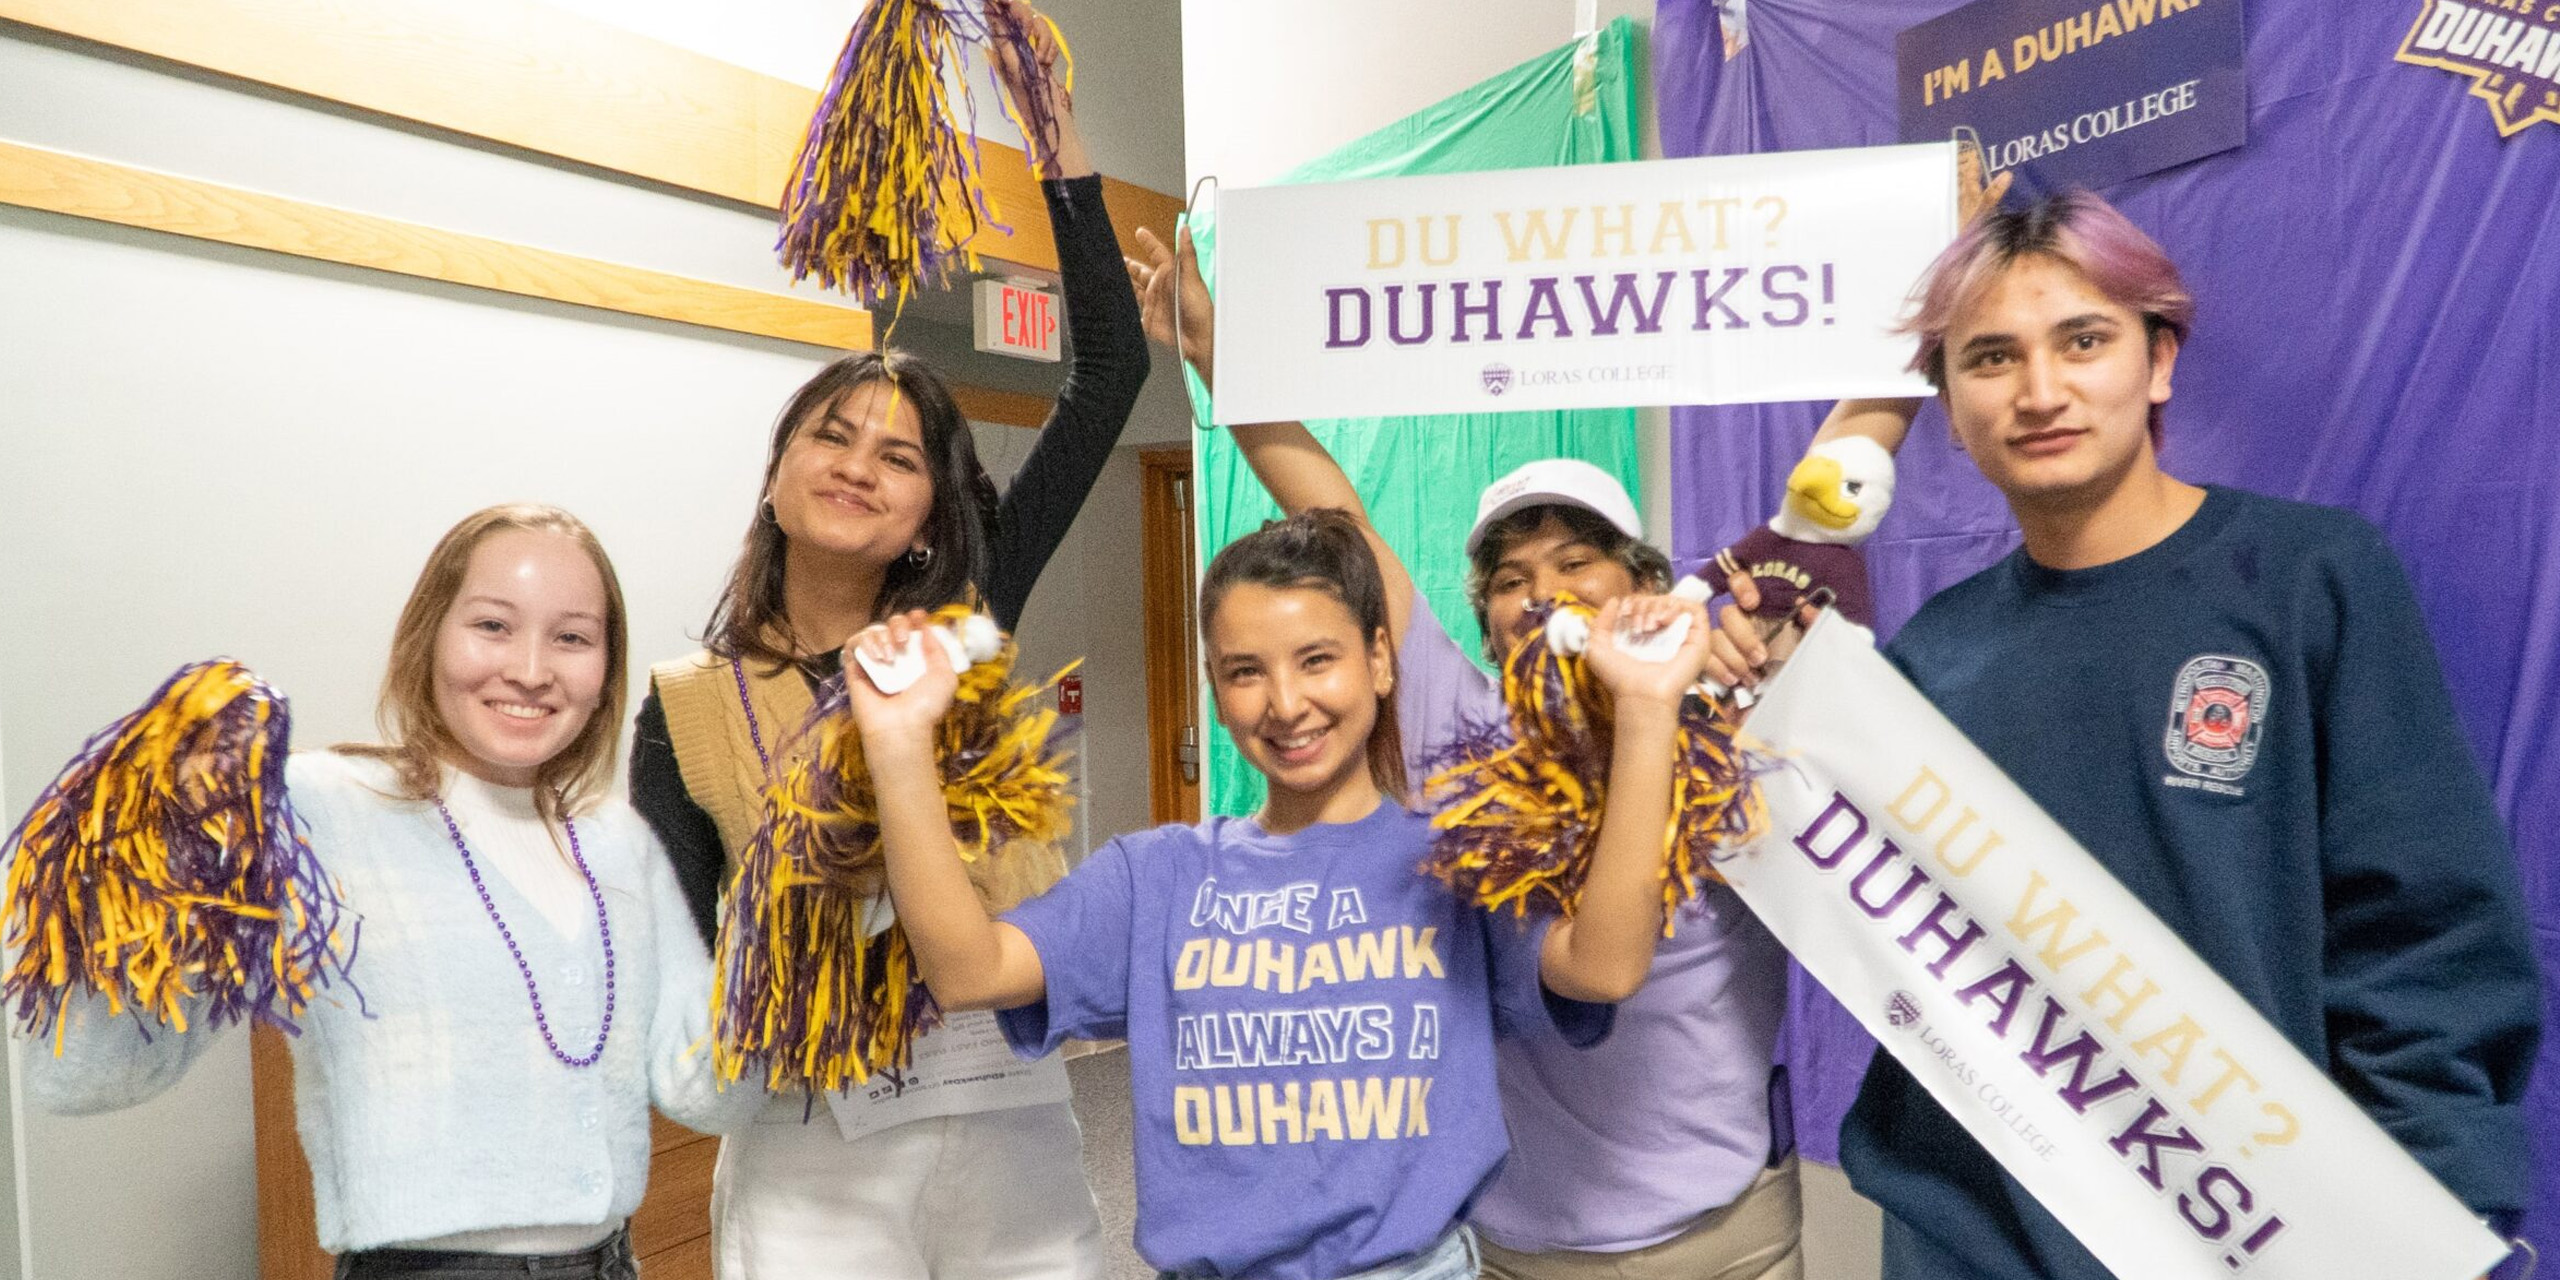 Five student celebrating Duhawk Day